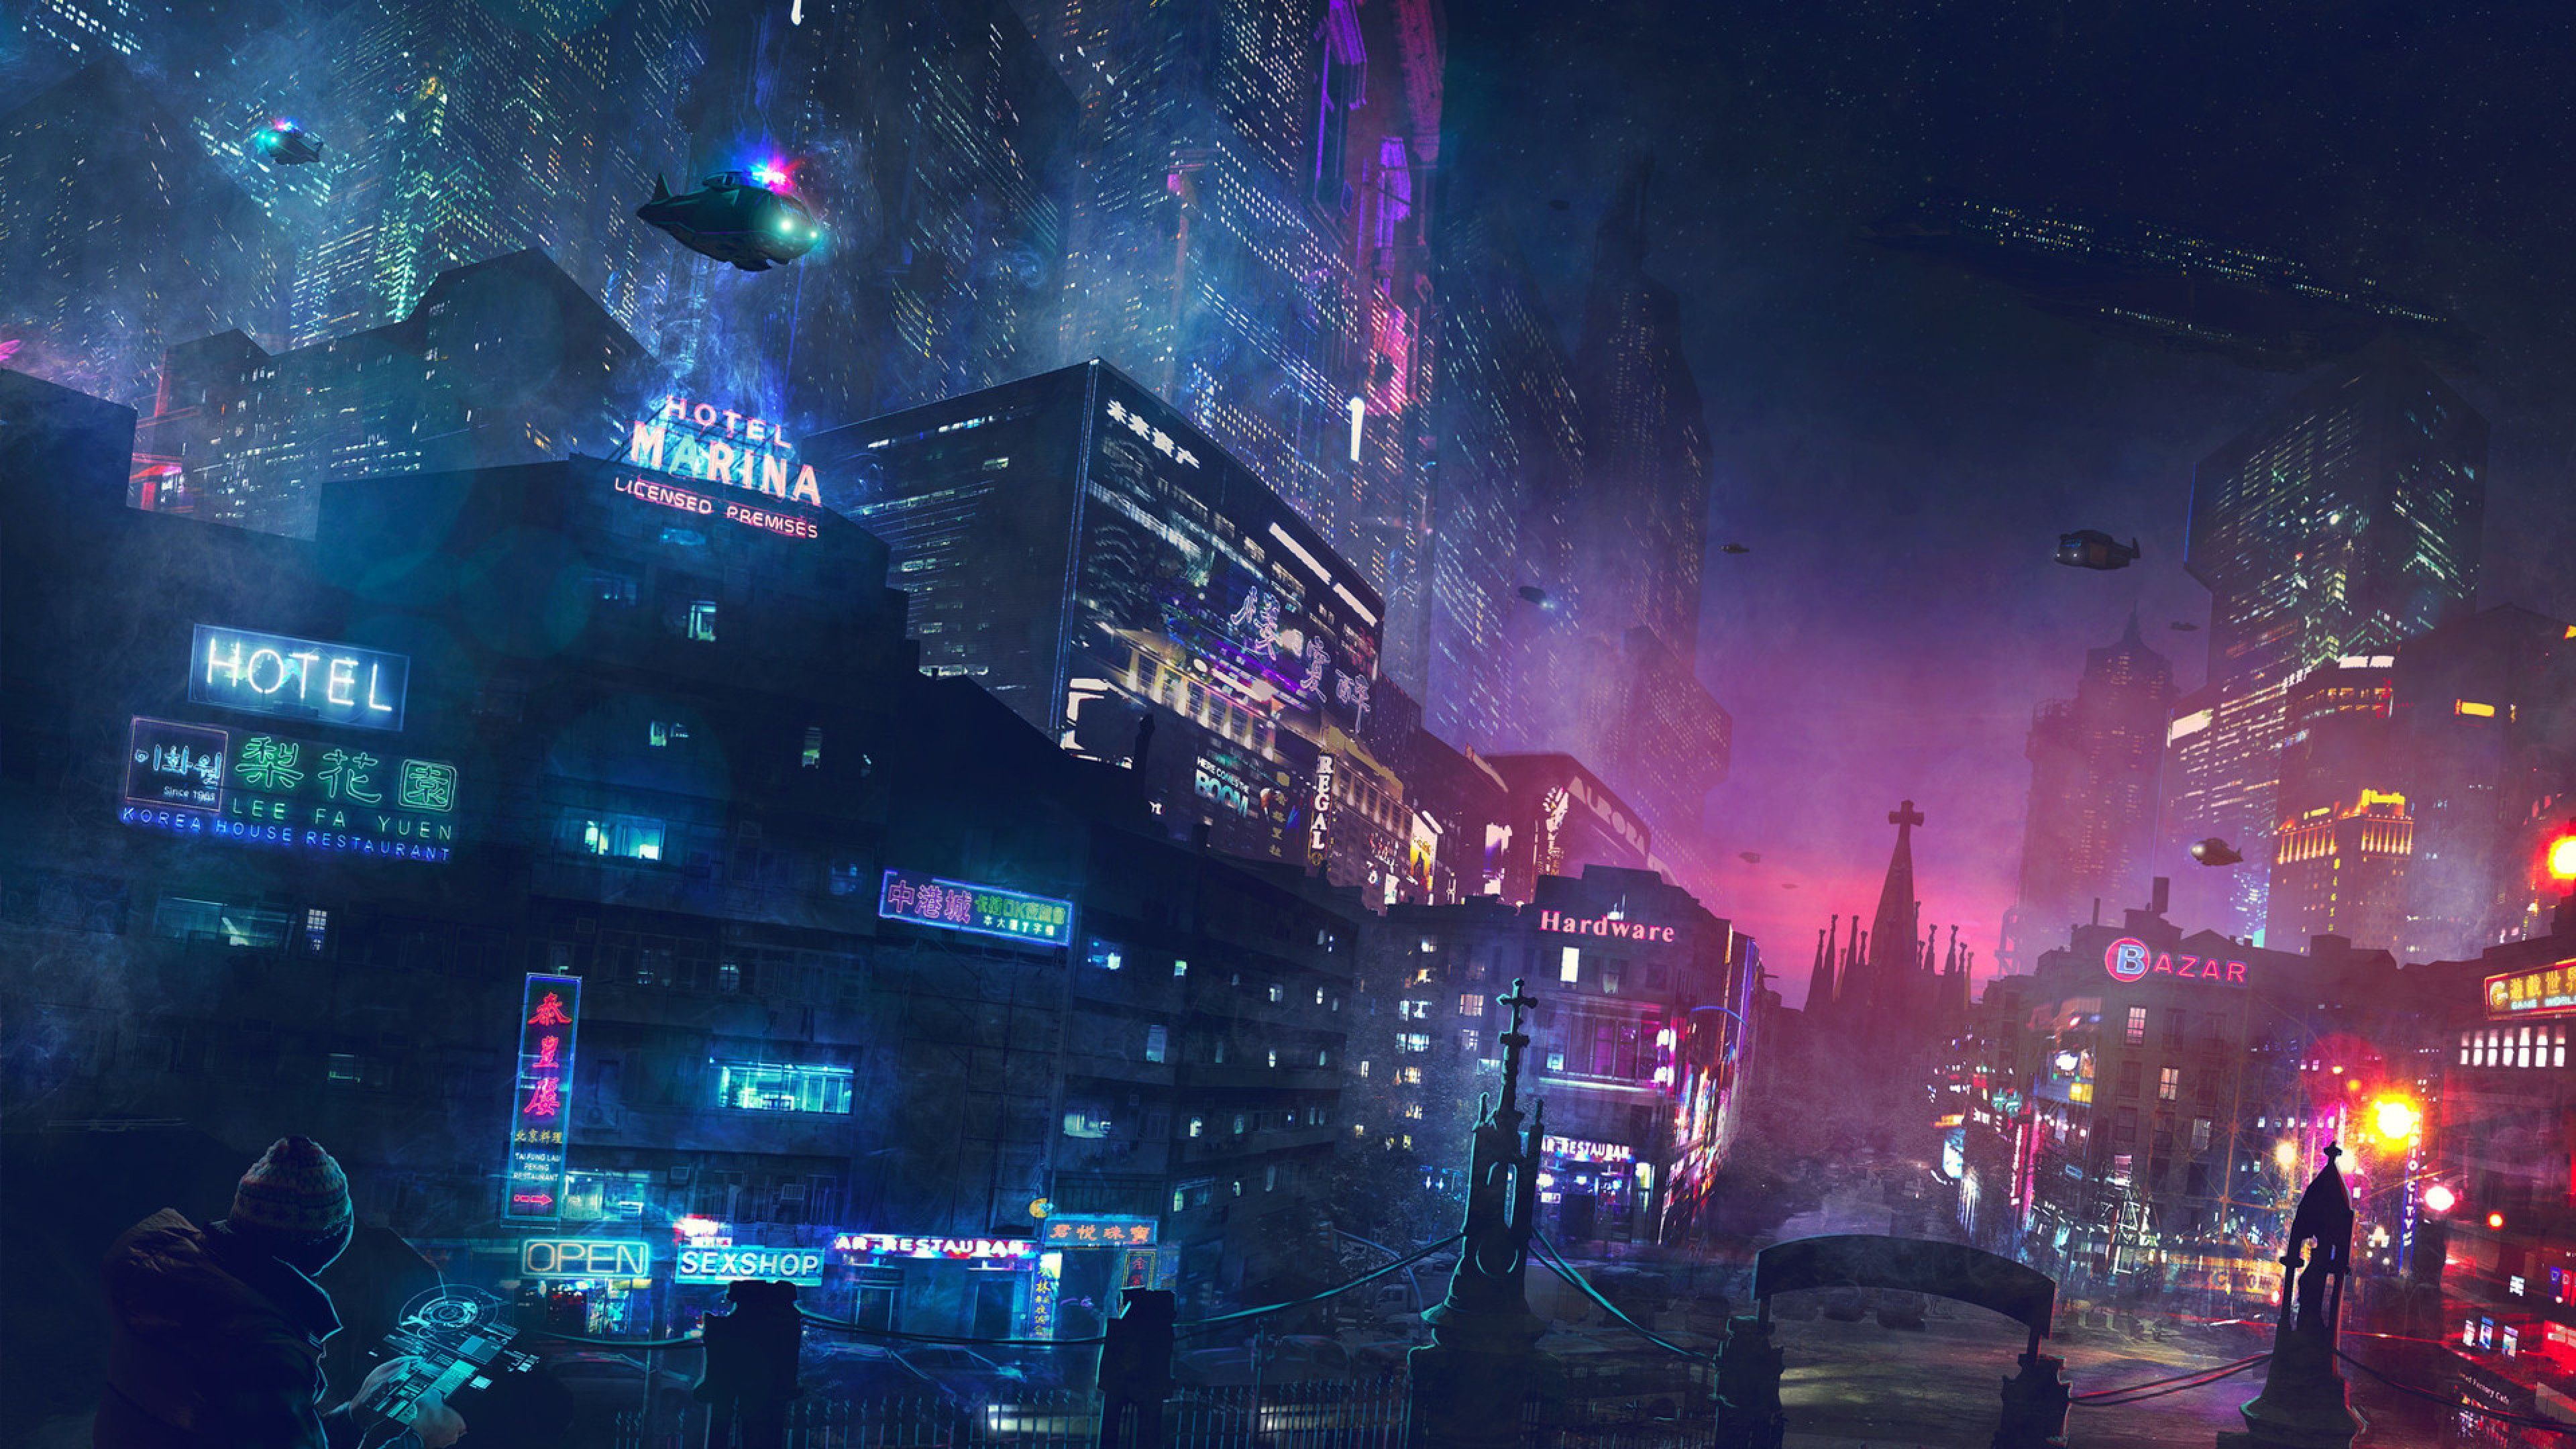 Cyberpunk 2077 Ultra, cyberpunk HD wallpaper